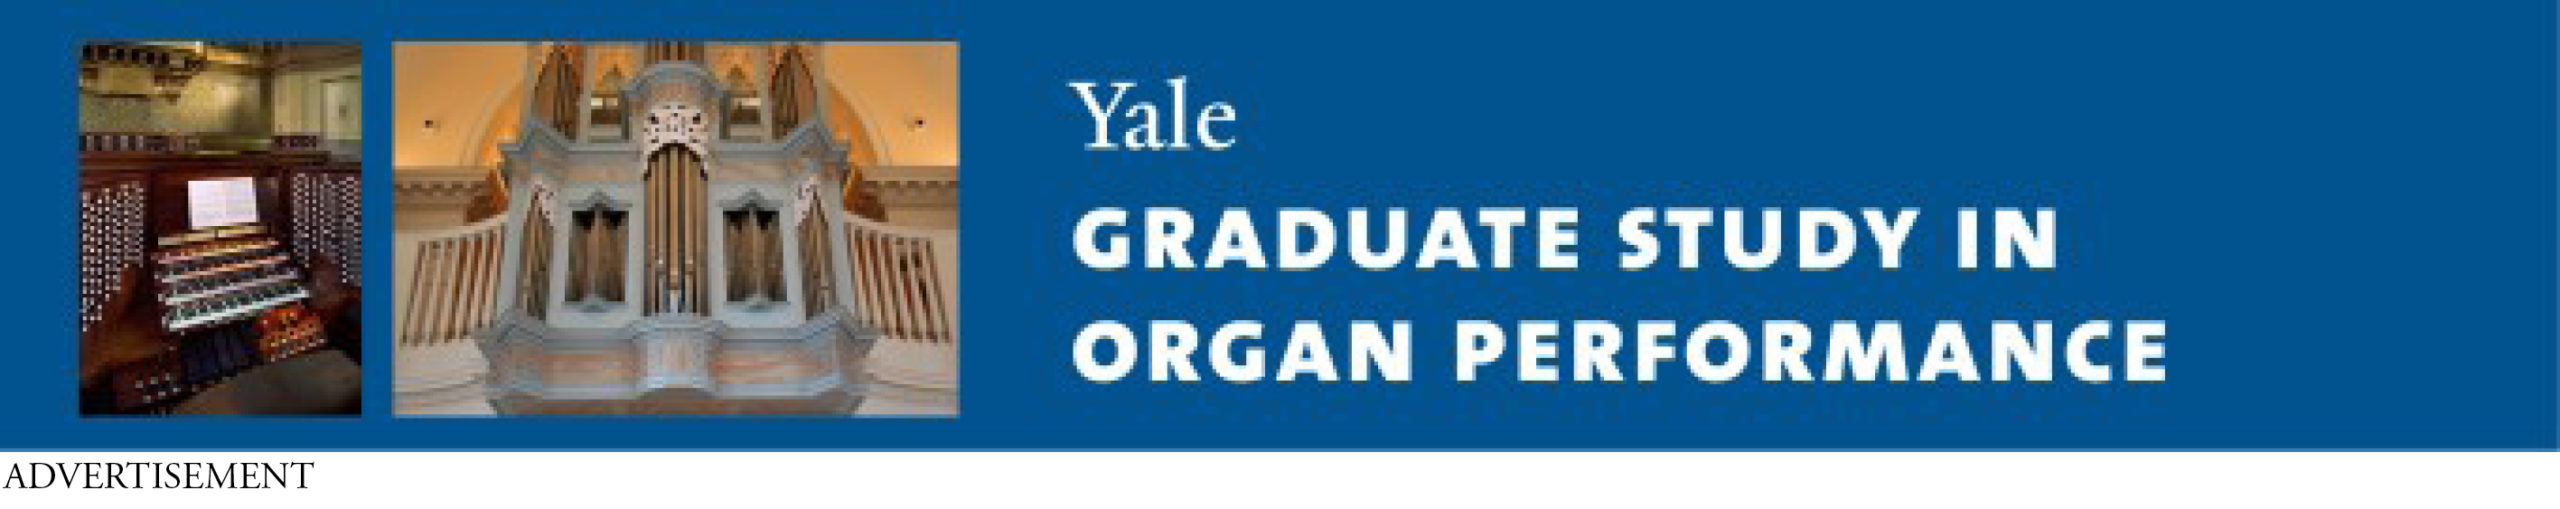 Yale ad Acad Degree Programs